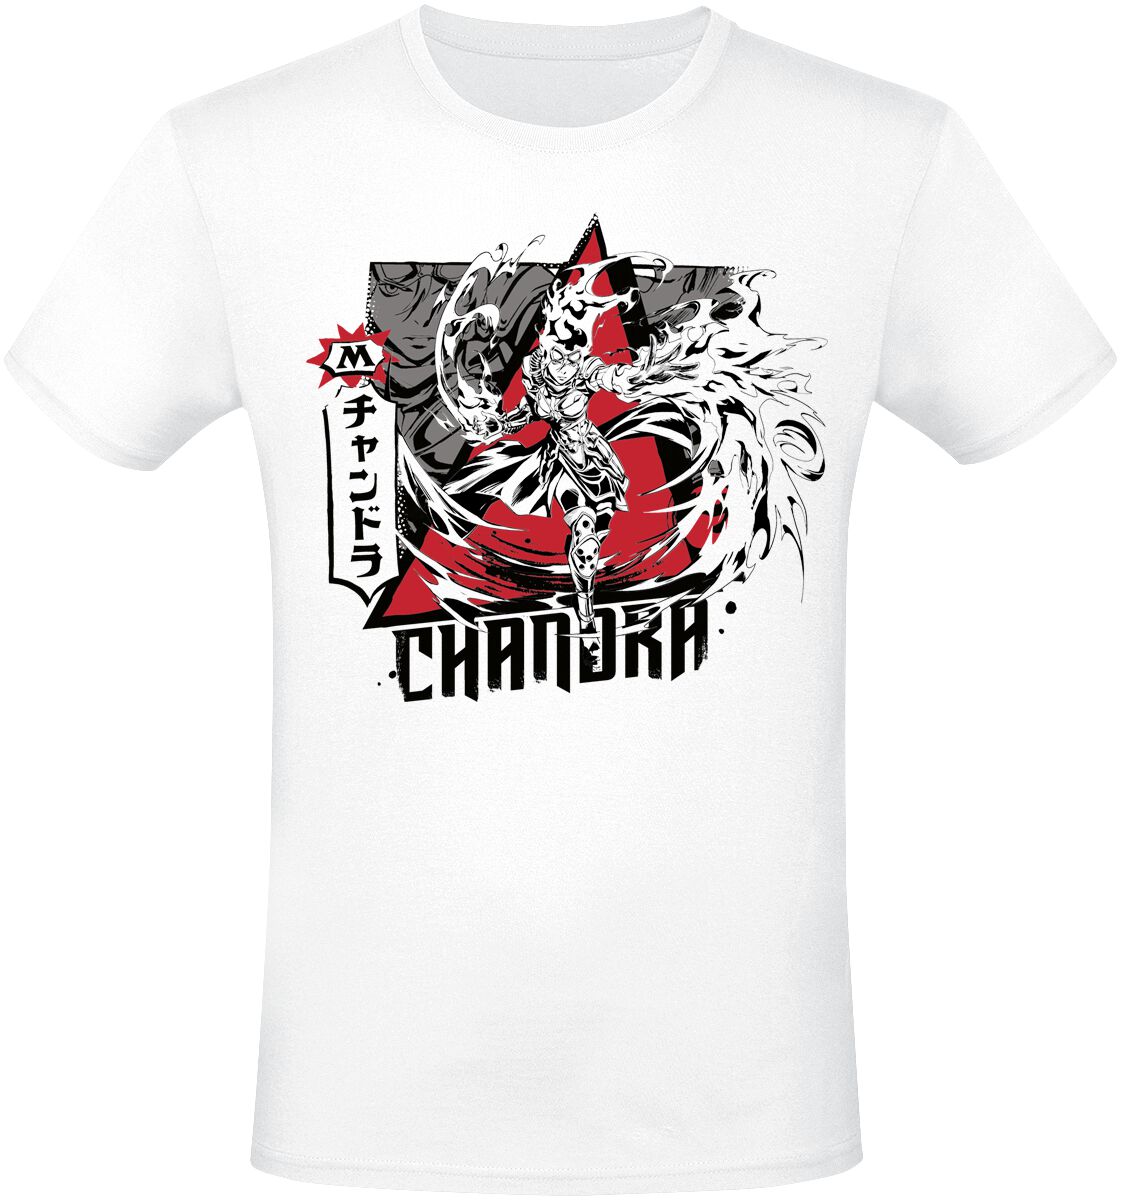 Magic: The Gathering Chandra T-Shirt weiß in S